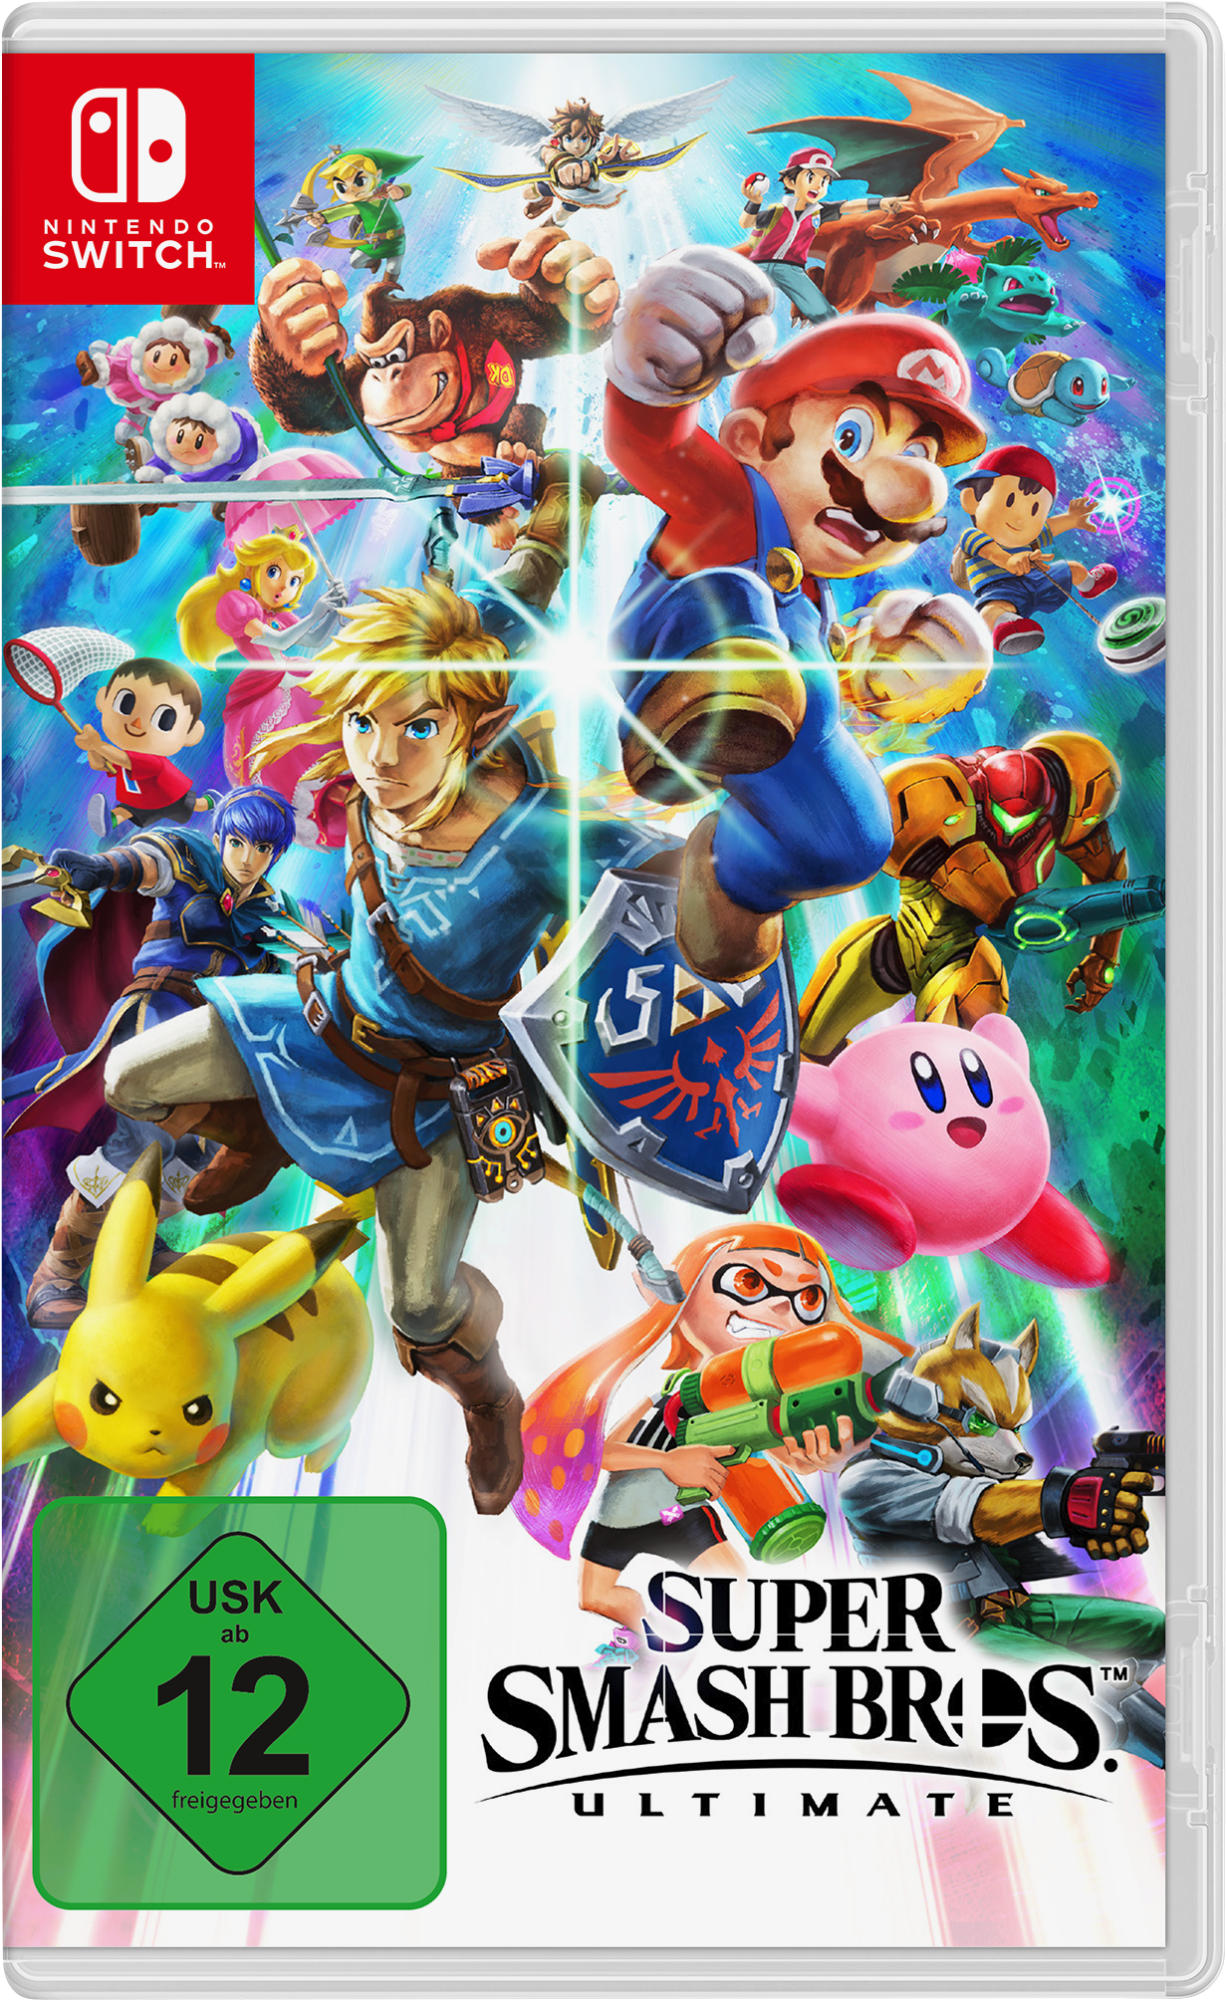 Ultimate - Switch] Smash [Nintendo Bros. Super